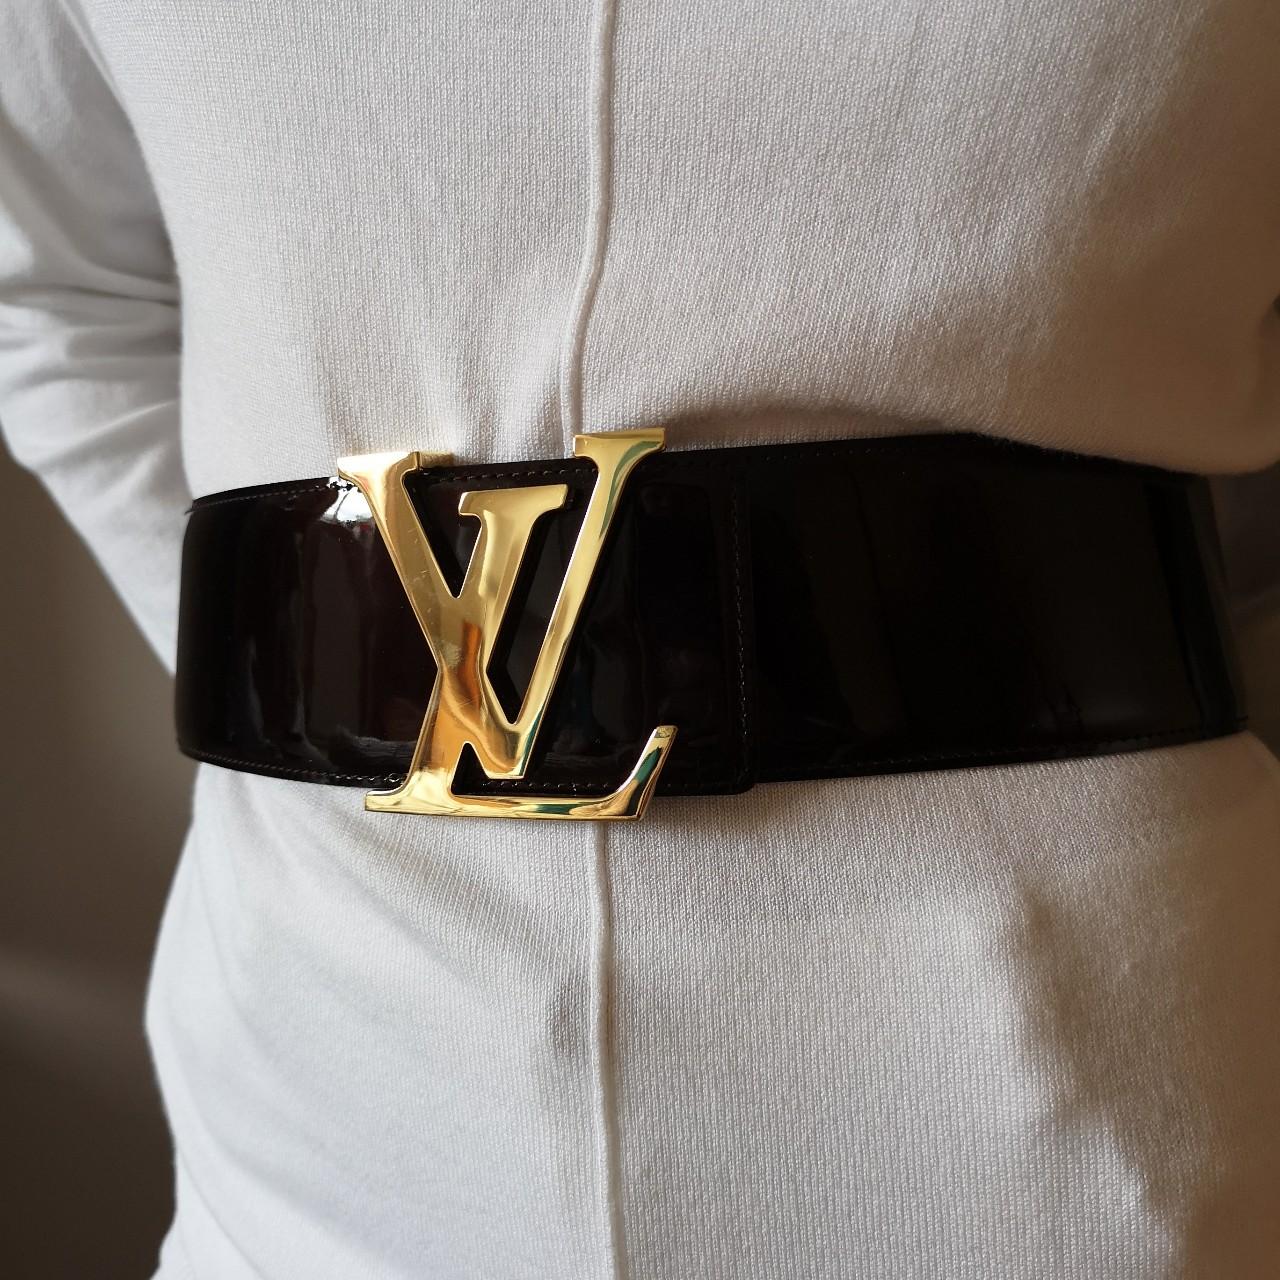 Lv women belt size 90/36 like a medium Literally - Depop